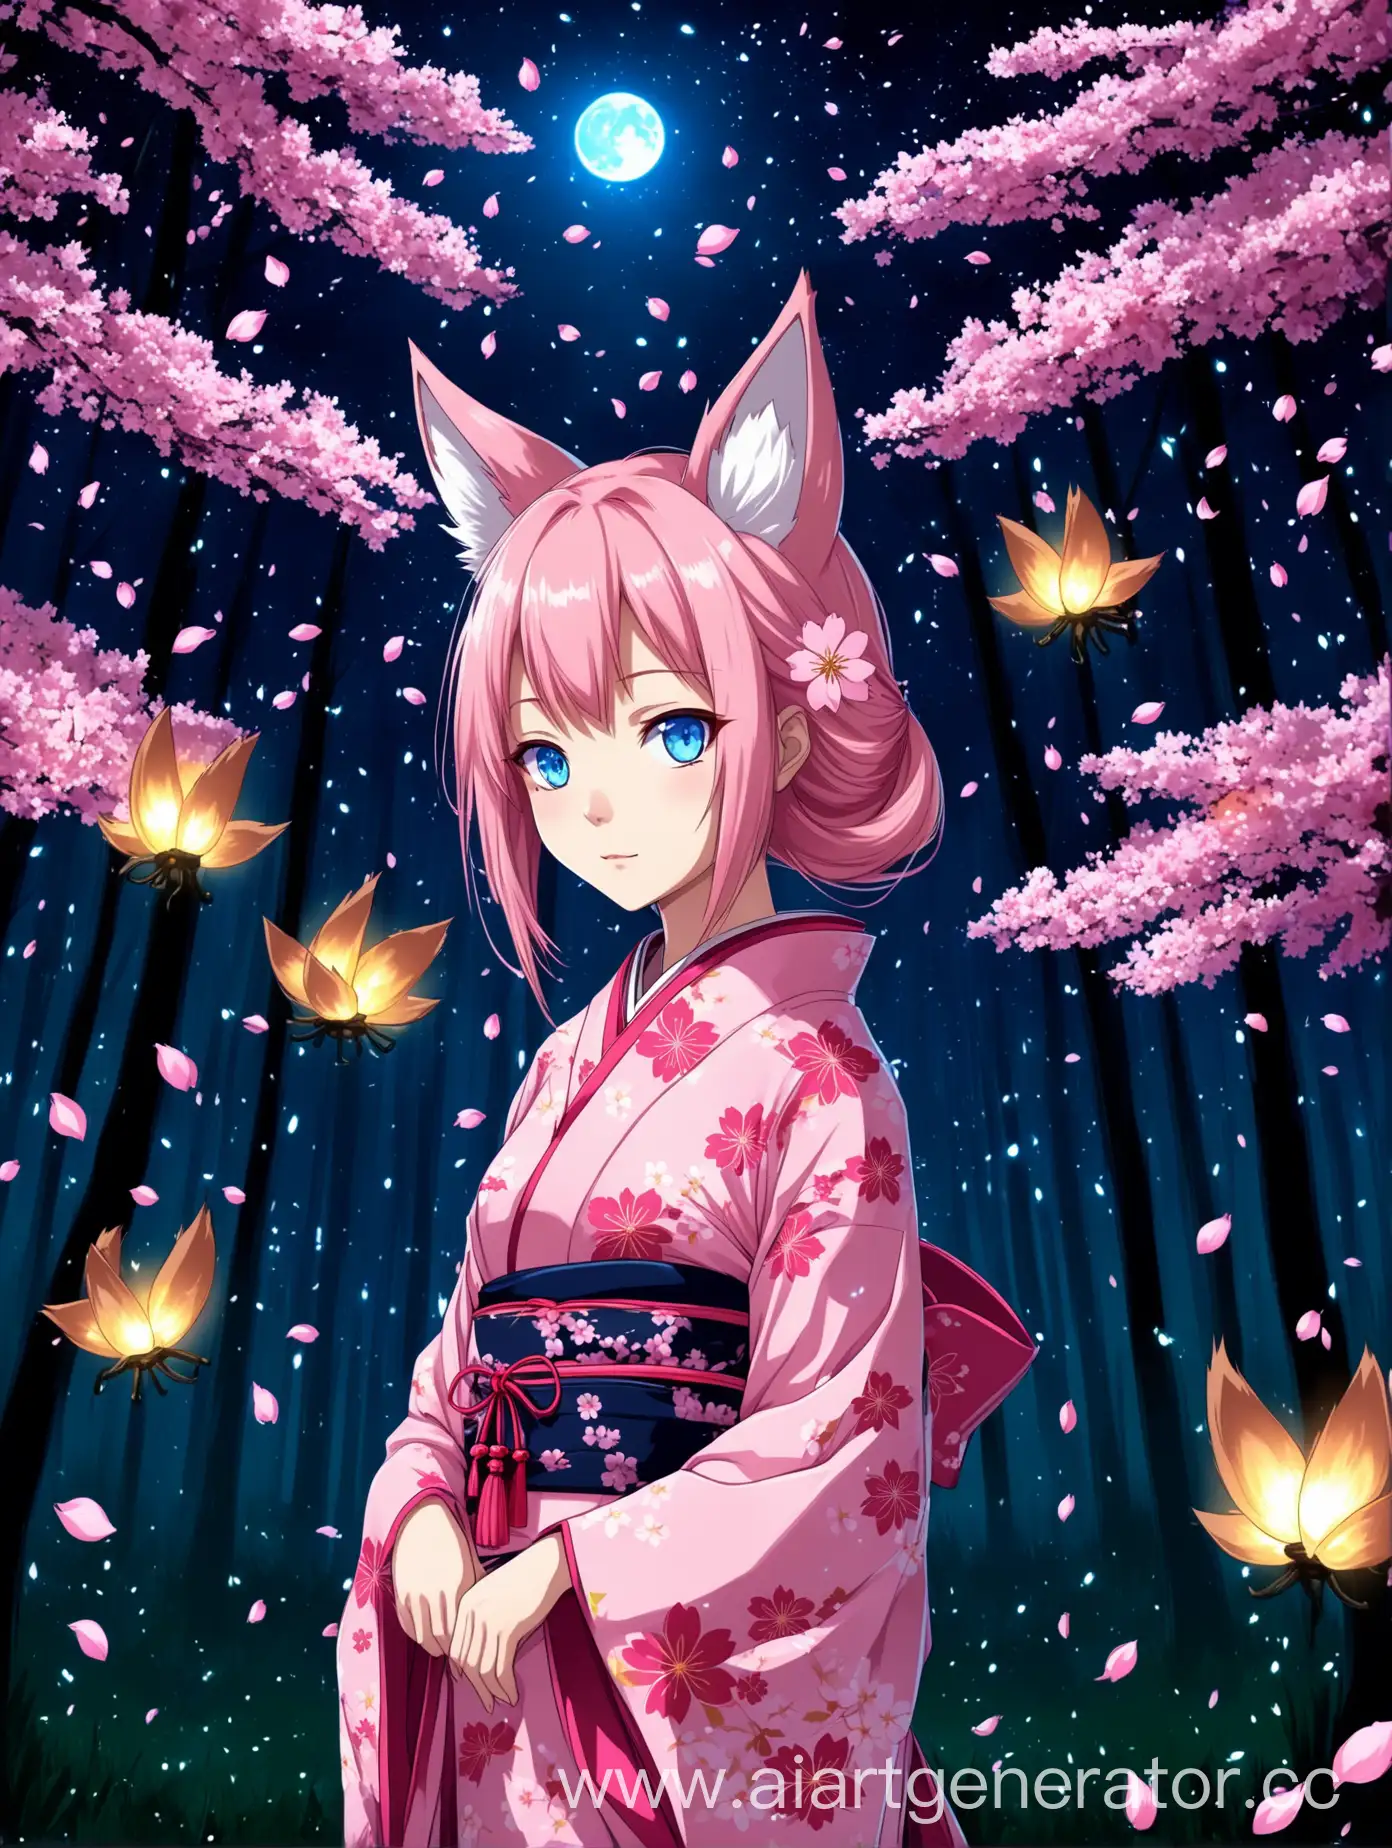 Anime-Kitsune-Girl-in-Pink-Kimono-with-Sakura-Petals-in-Magical-Forest